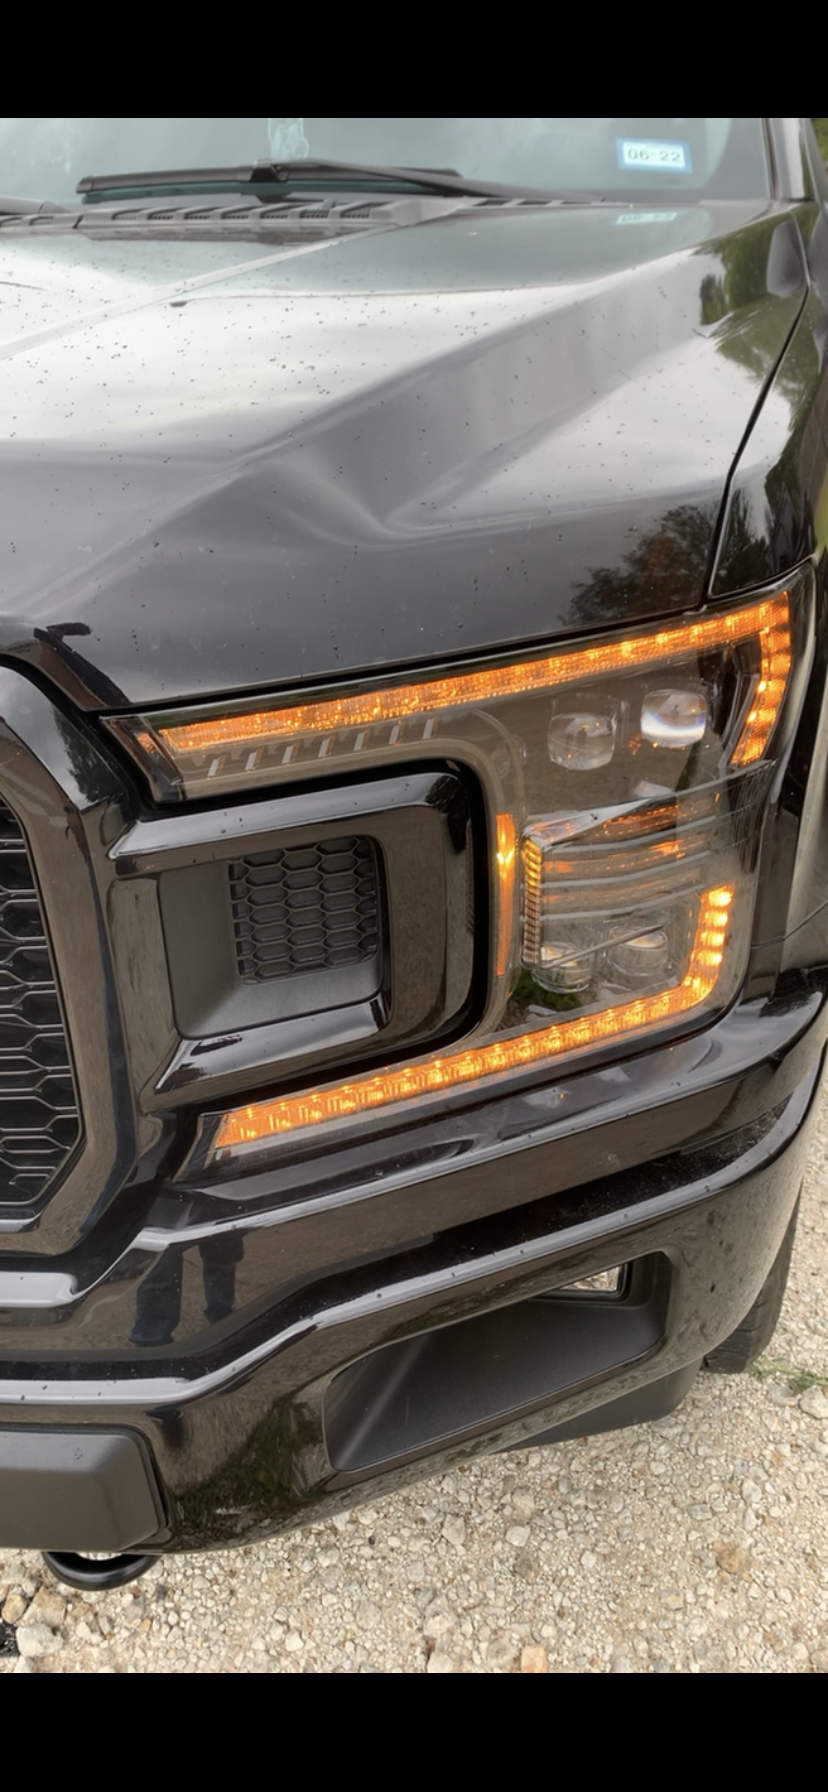 new headlights on truck